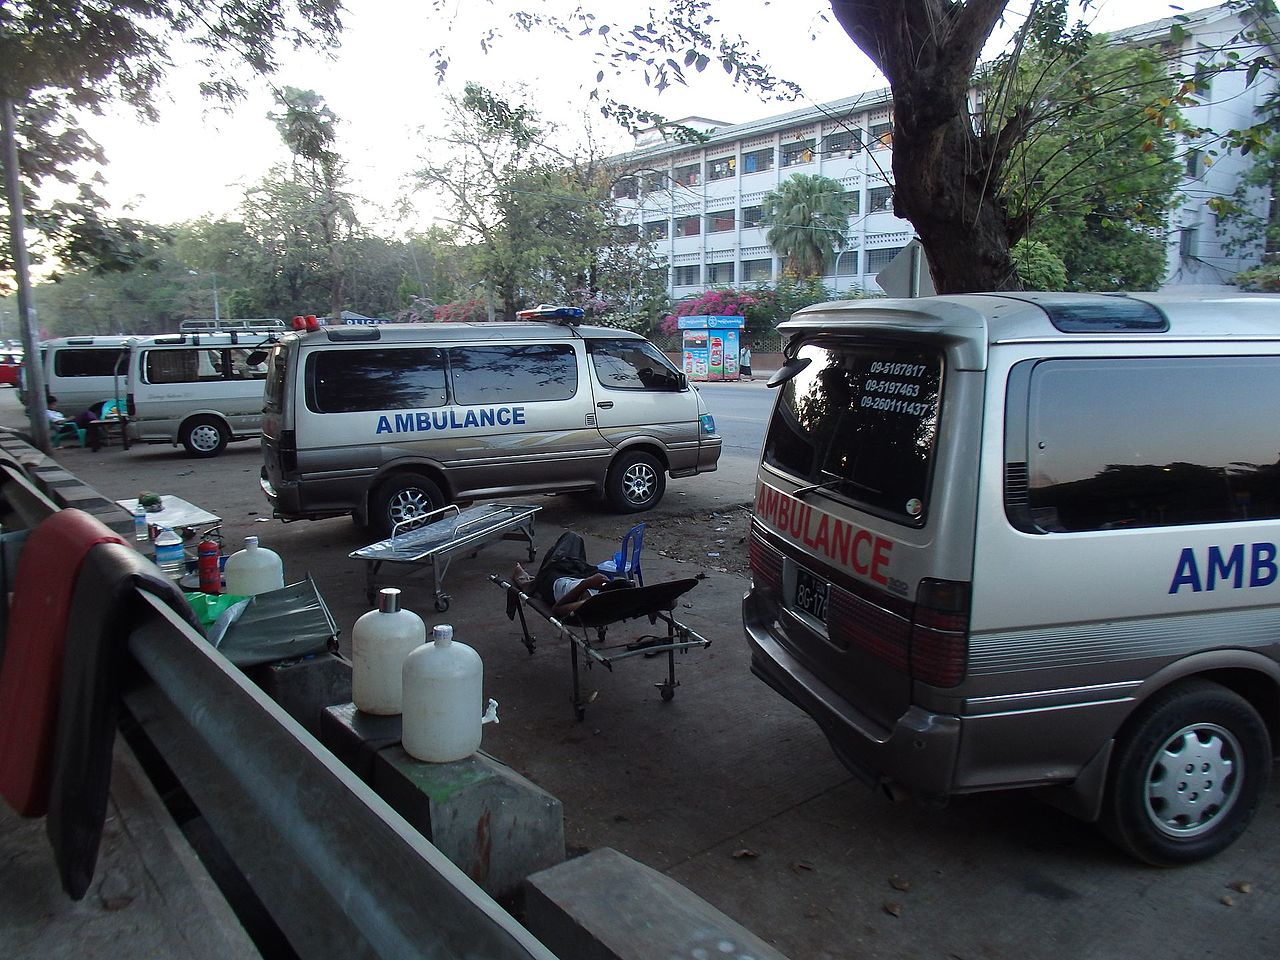 Ambulances parked in Yangon, Myanmar (Burma)